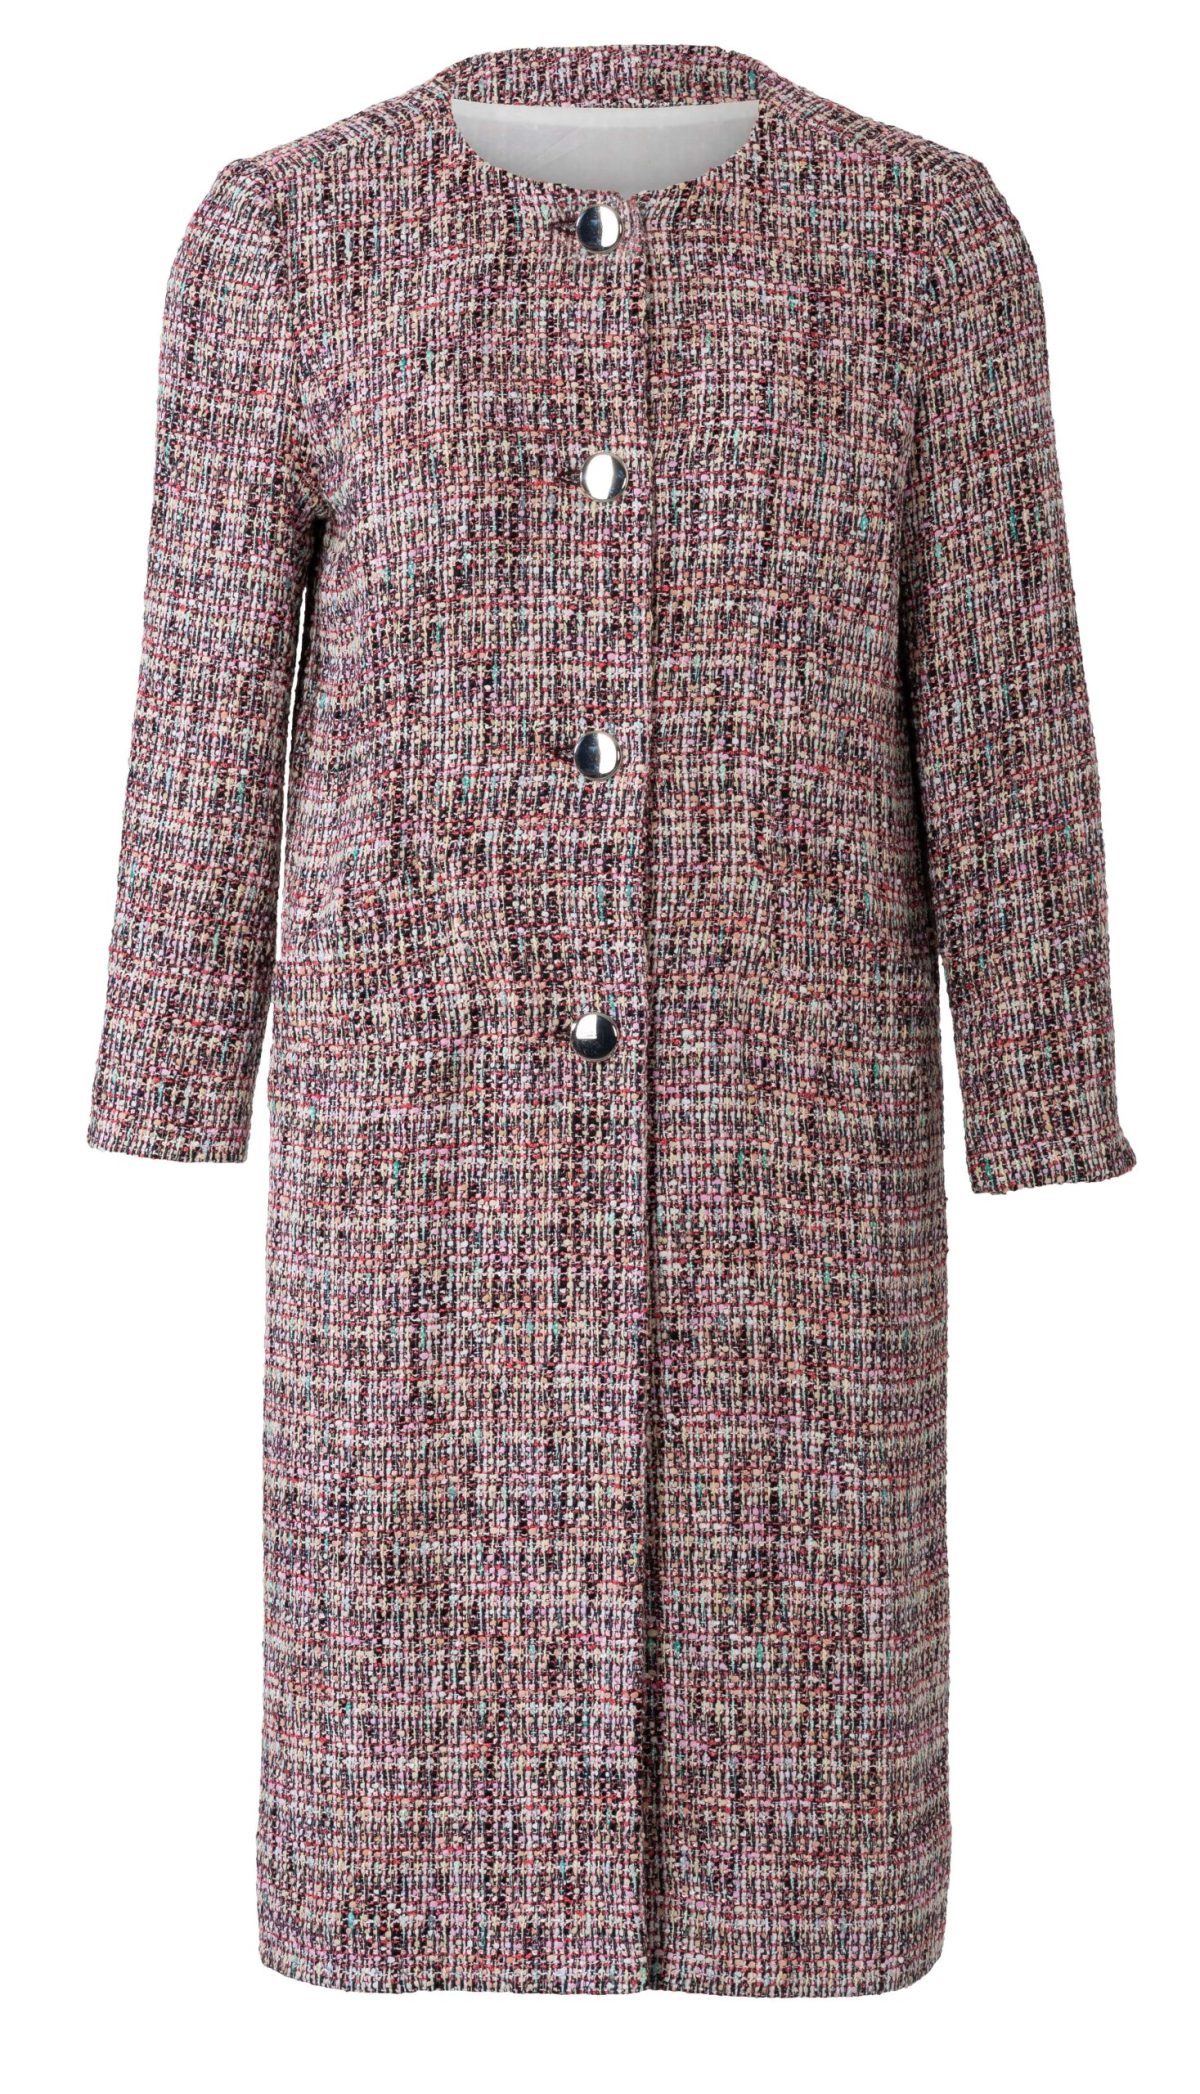 Burda Style Pattern 6248 Misses' Lined Coat Or Jacket